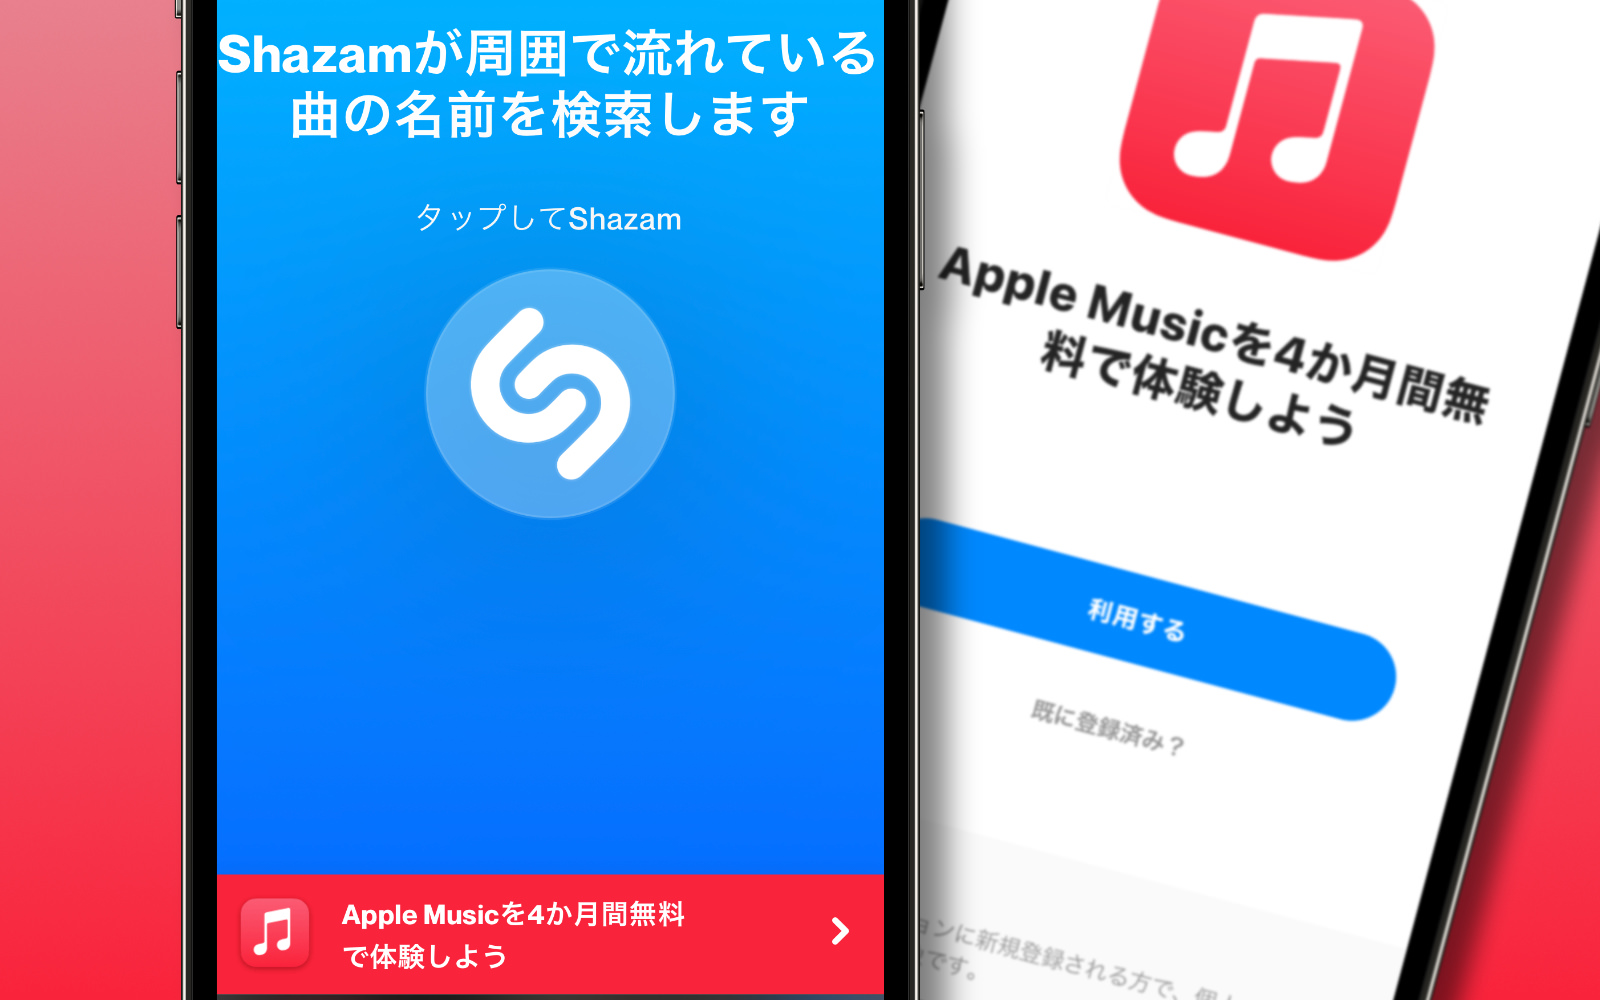 Shazam-three-month-free-of-apple-music.jpg